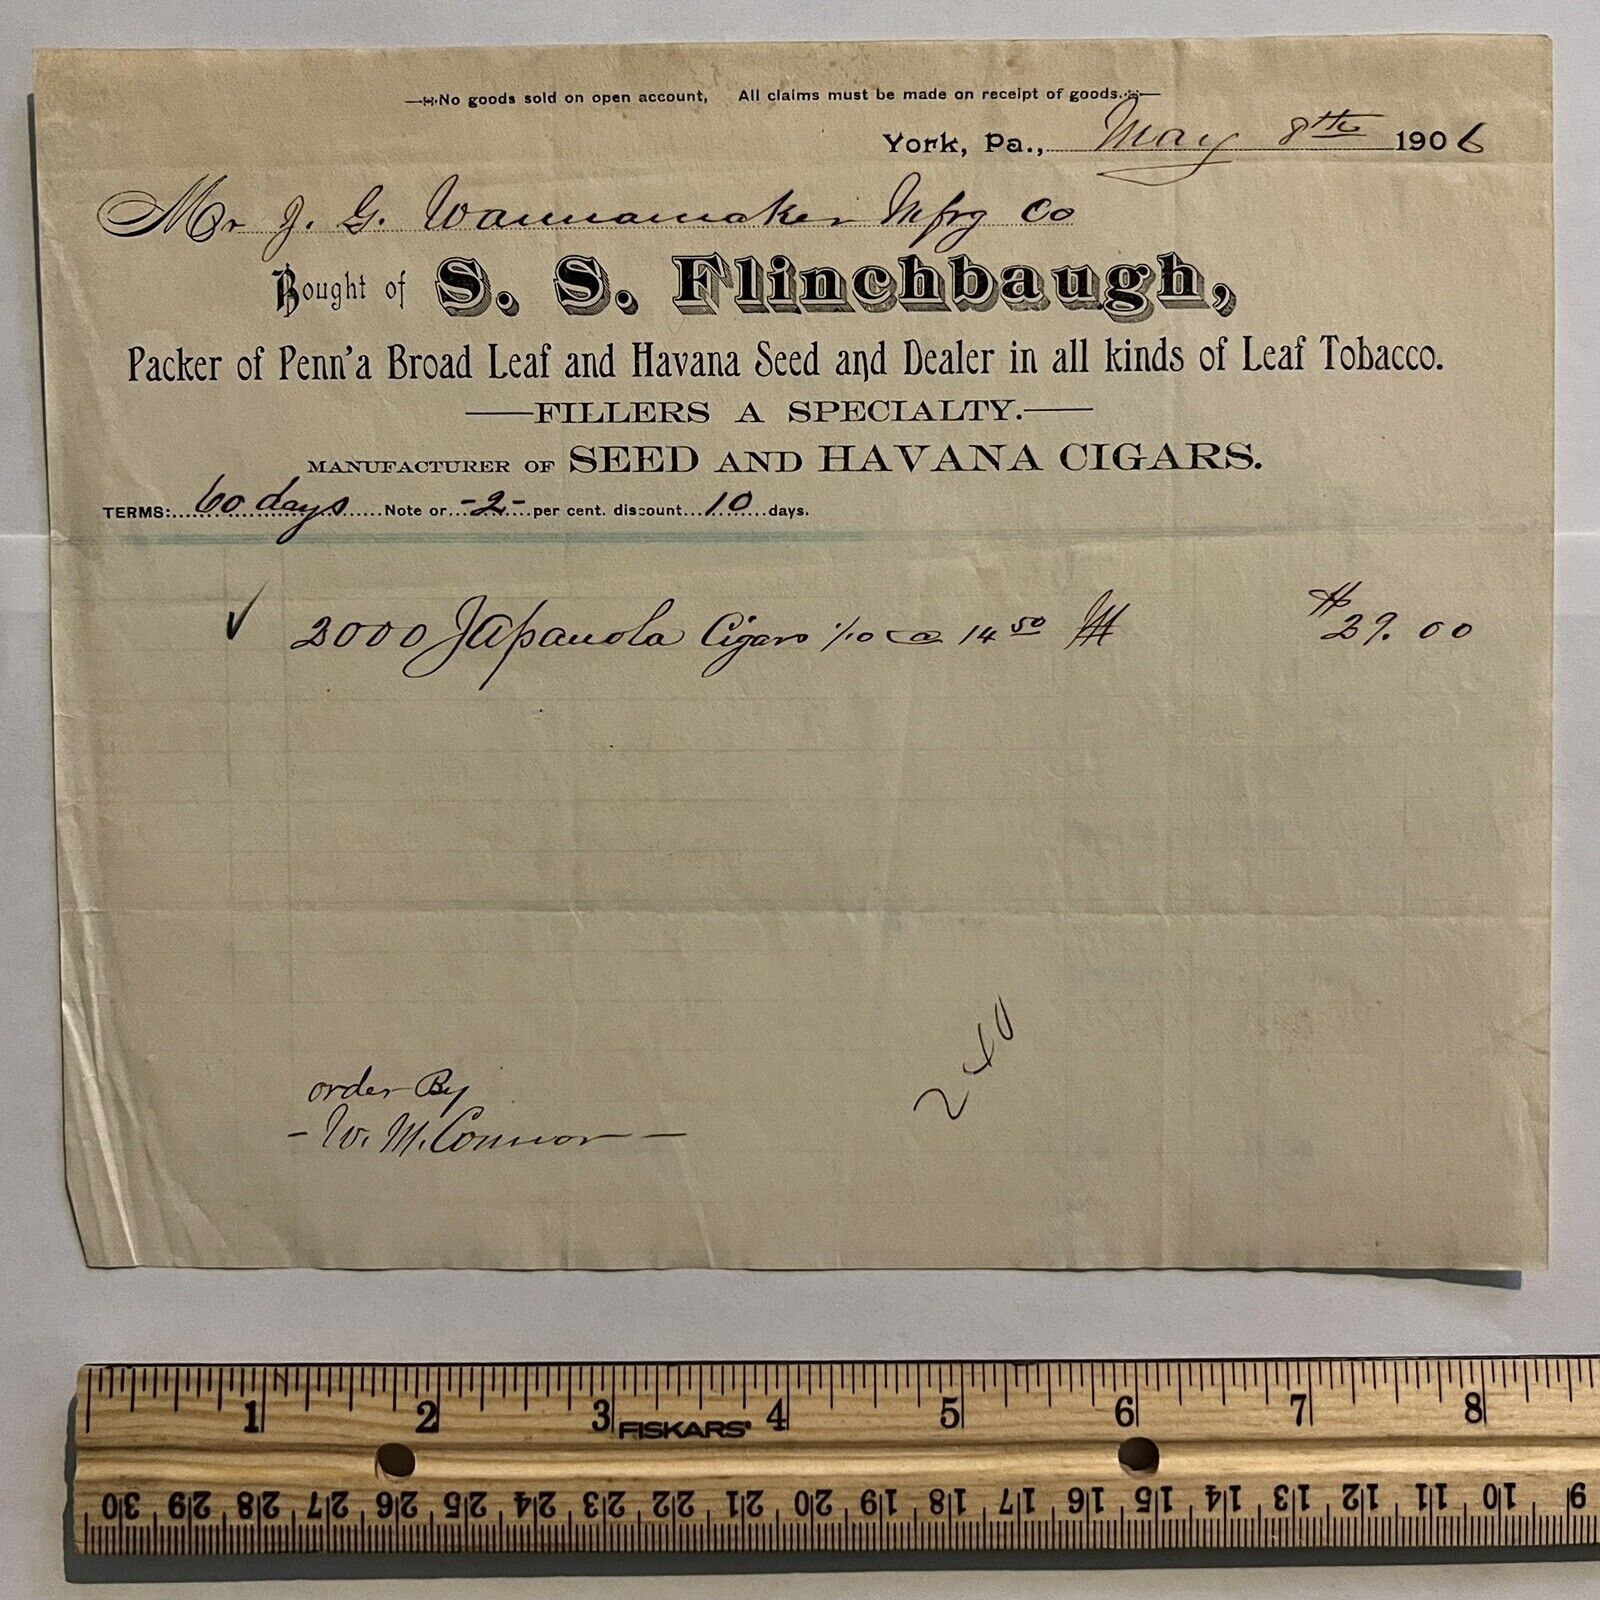 1906 S.S. FLINCHBAUGH SEED & CIGARS YORK, PA RECEIPT FOR JAPANOLA CIGARS